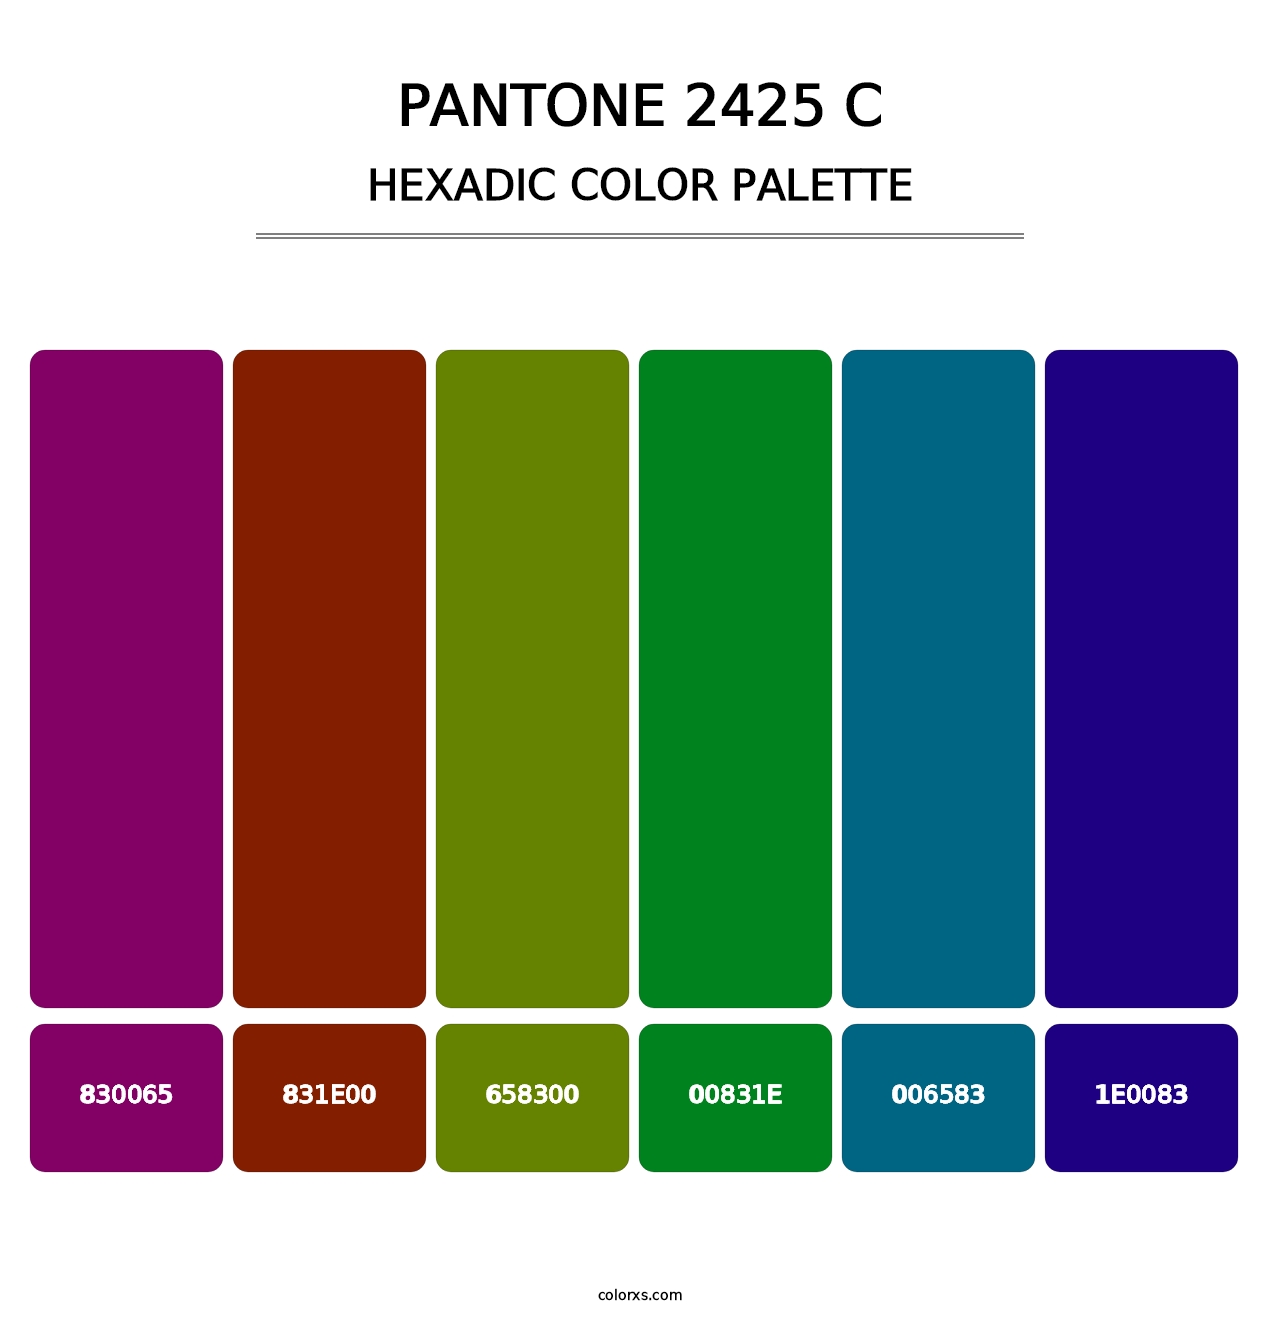 PANTONE 2425 C - Hexadic Color Palette